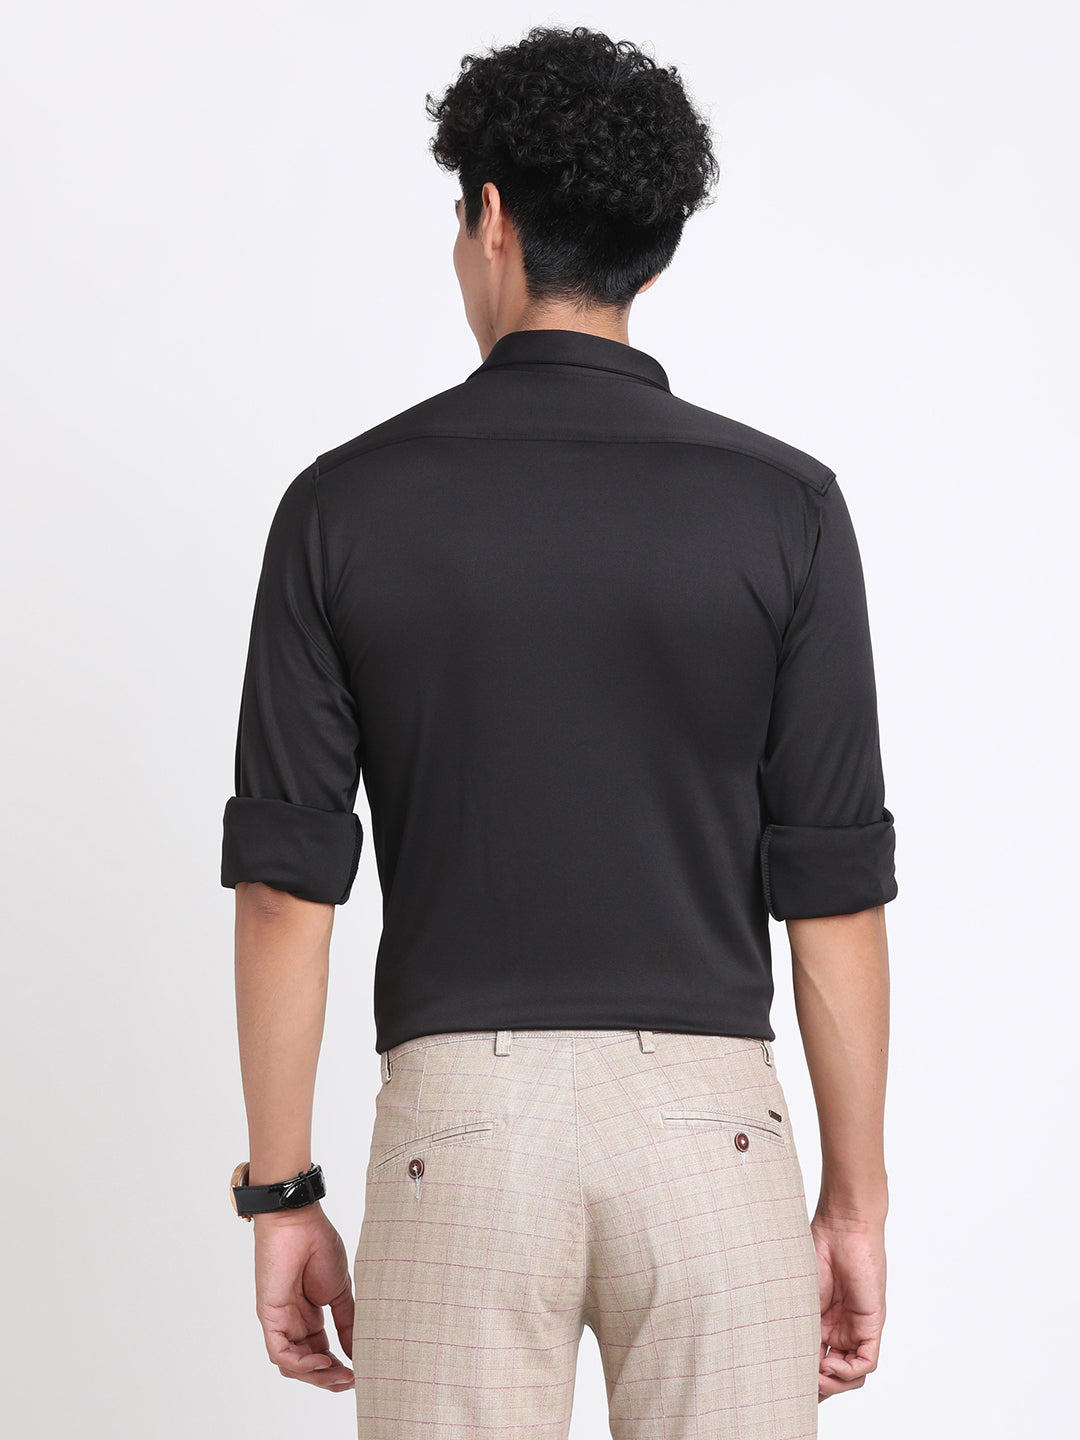 Poly Spandex Melange Black Plain Ultra Slim Fit Full Sleeve Active Shirt